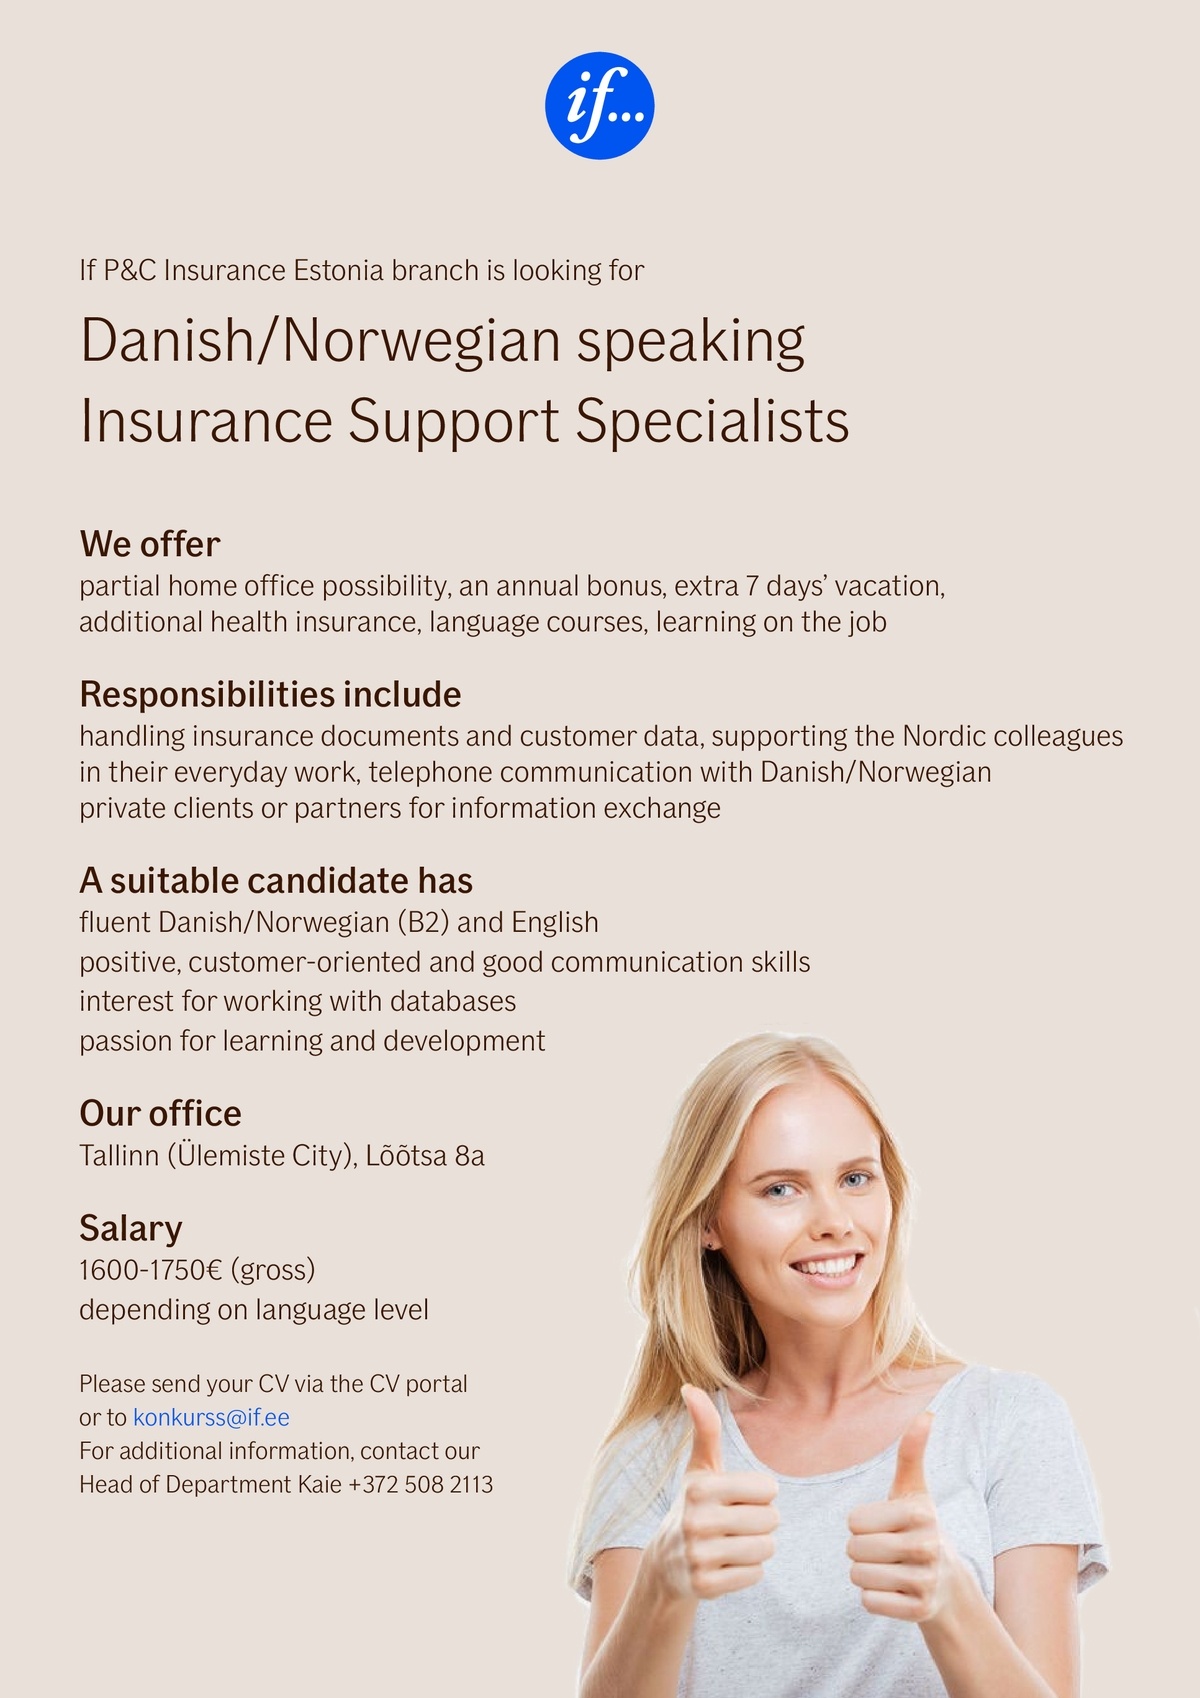 If P&C Insurance Ltd (publ) Eesti filiaal Danish/Norwegian speaking Insurance Support Specialists